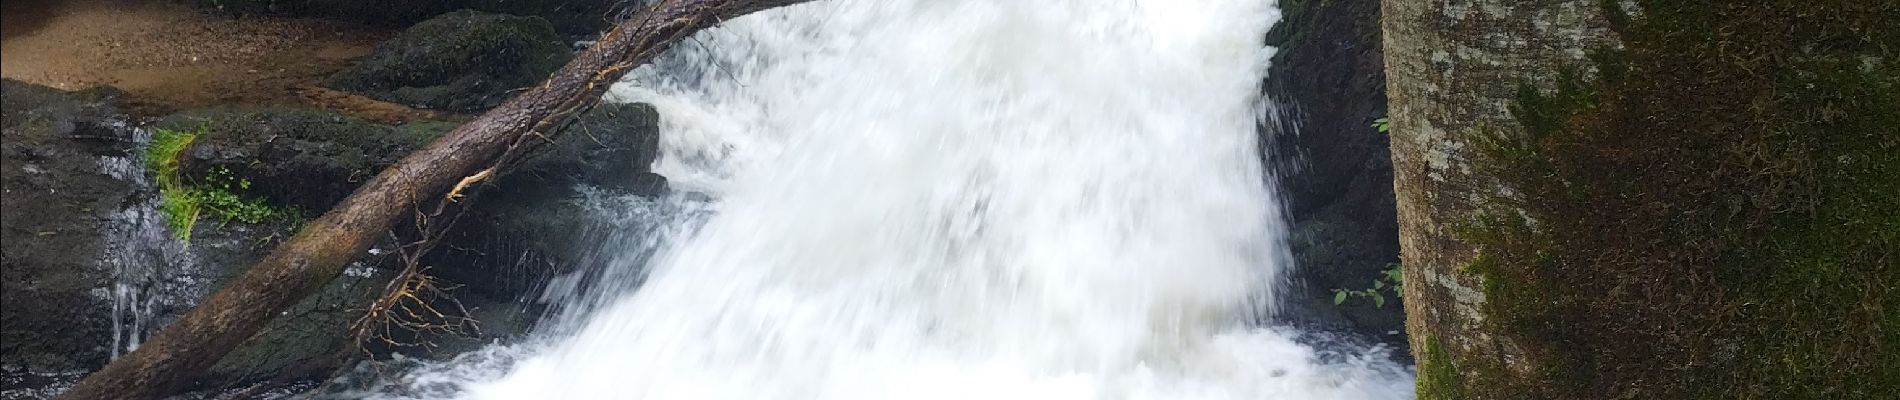 Excursión Senderismo Ferrières-sur-Sichon - Grotte des fées y cascade  - Photo